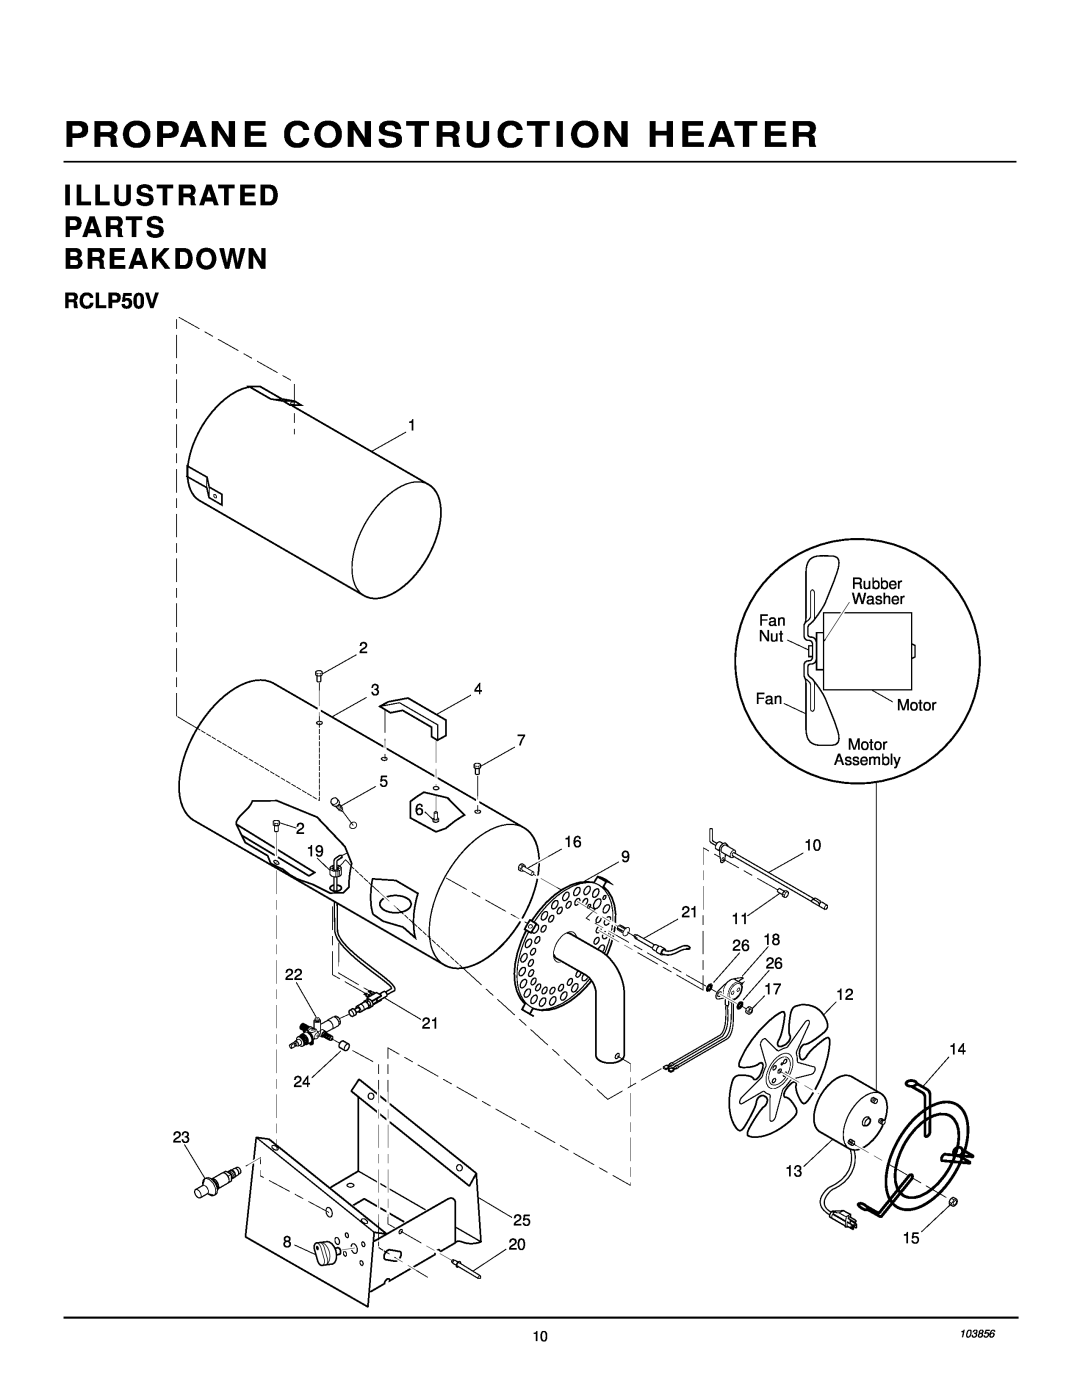 Desa RCLP50V owner manual Illustrated Parts Breakdown, Propane Construction Heater 